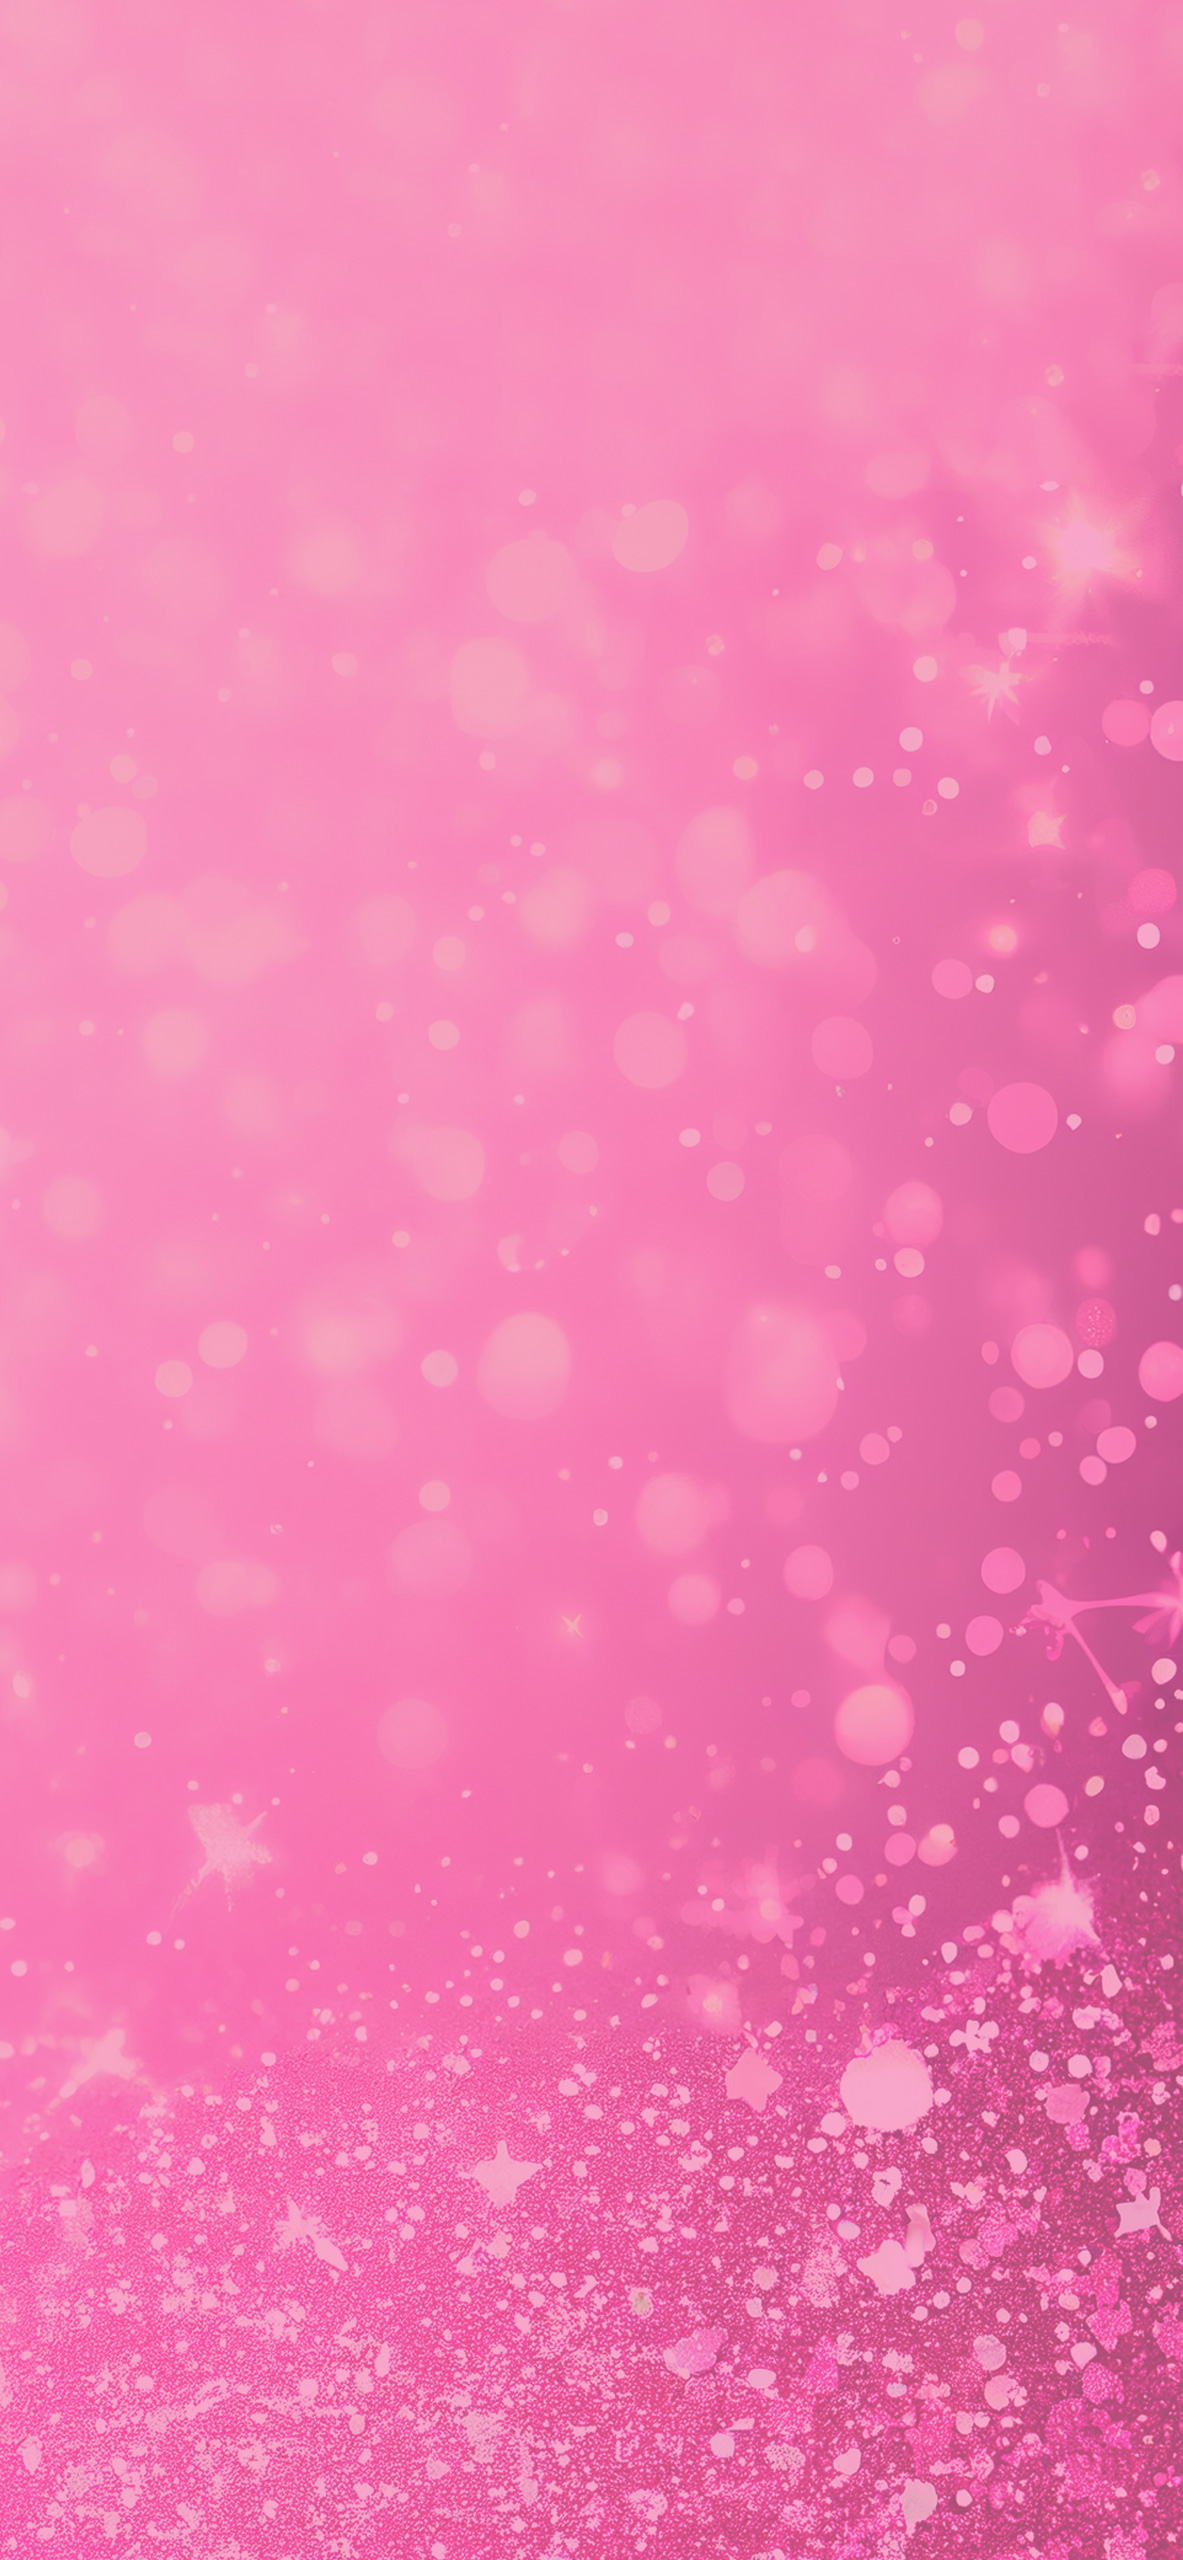 pink glitter with blur background